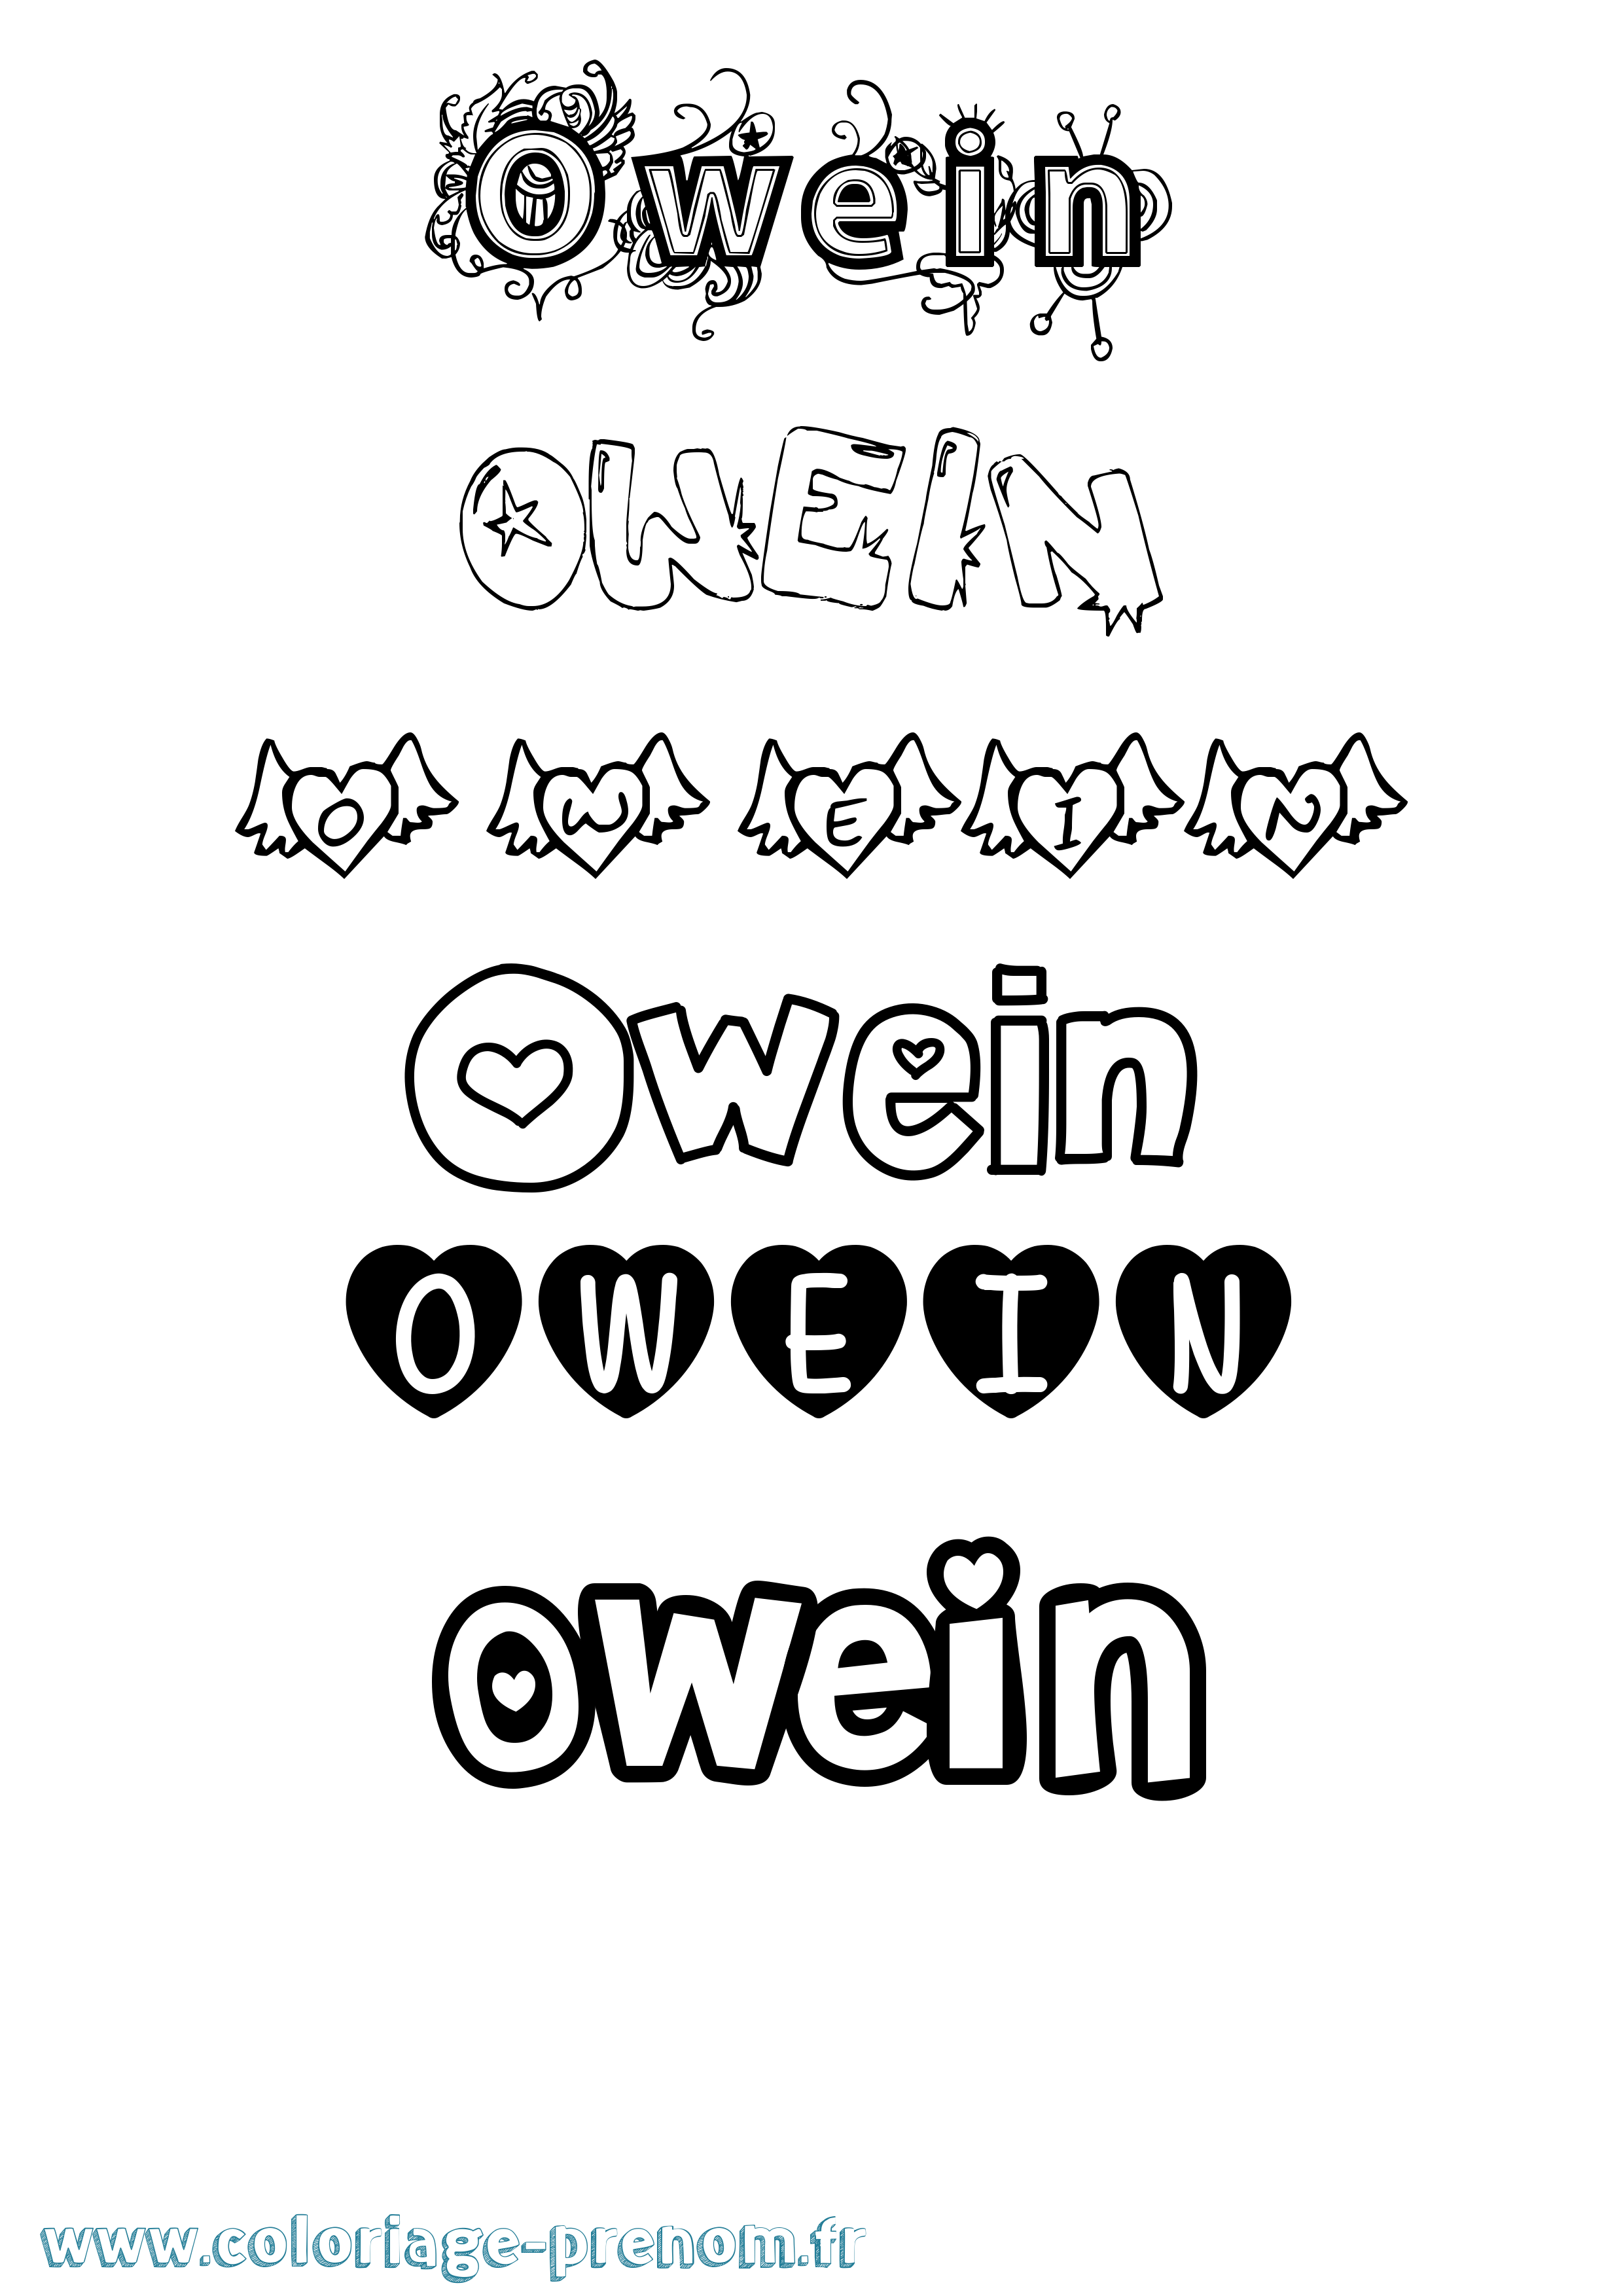 Coloriage prénom Owein Girly